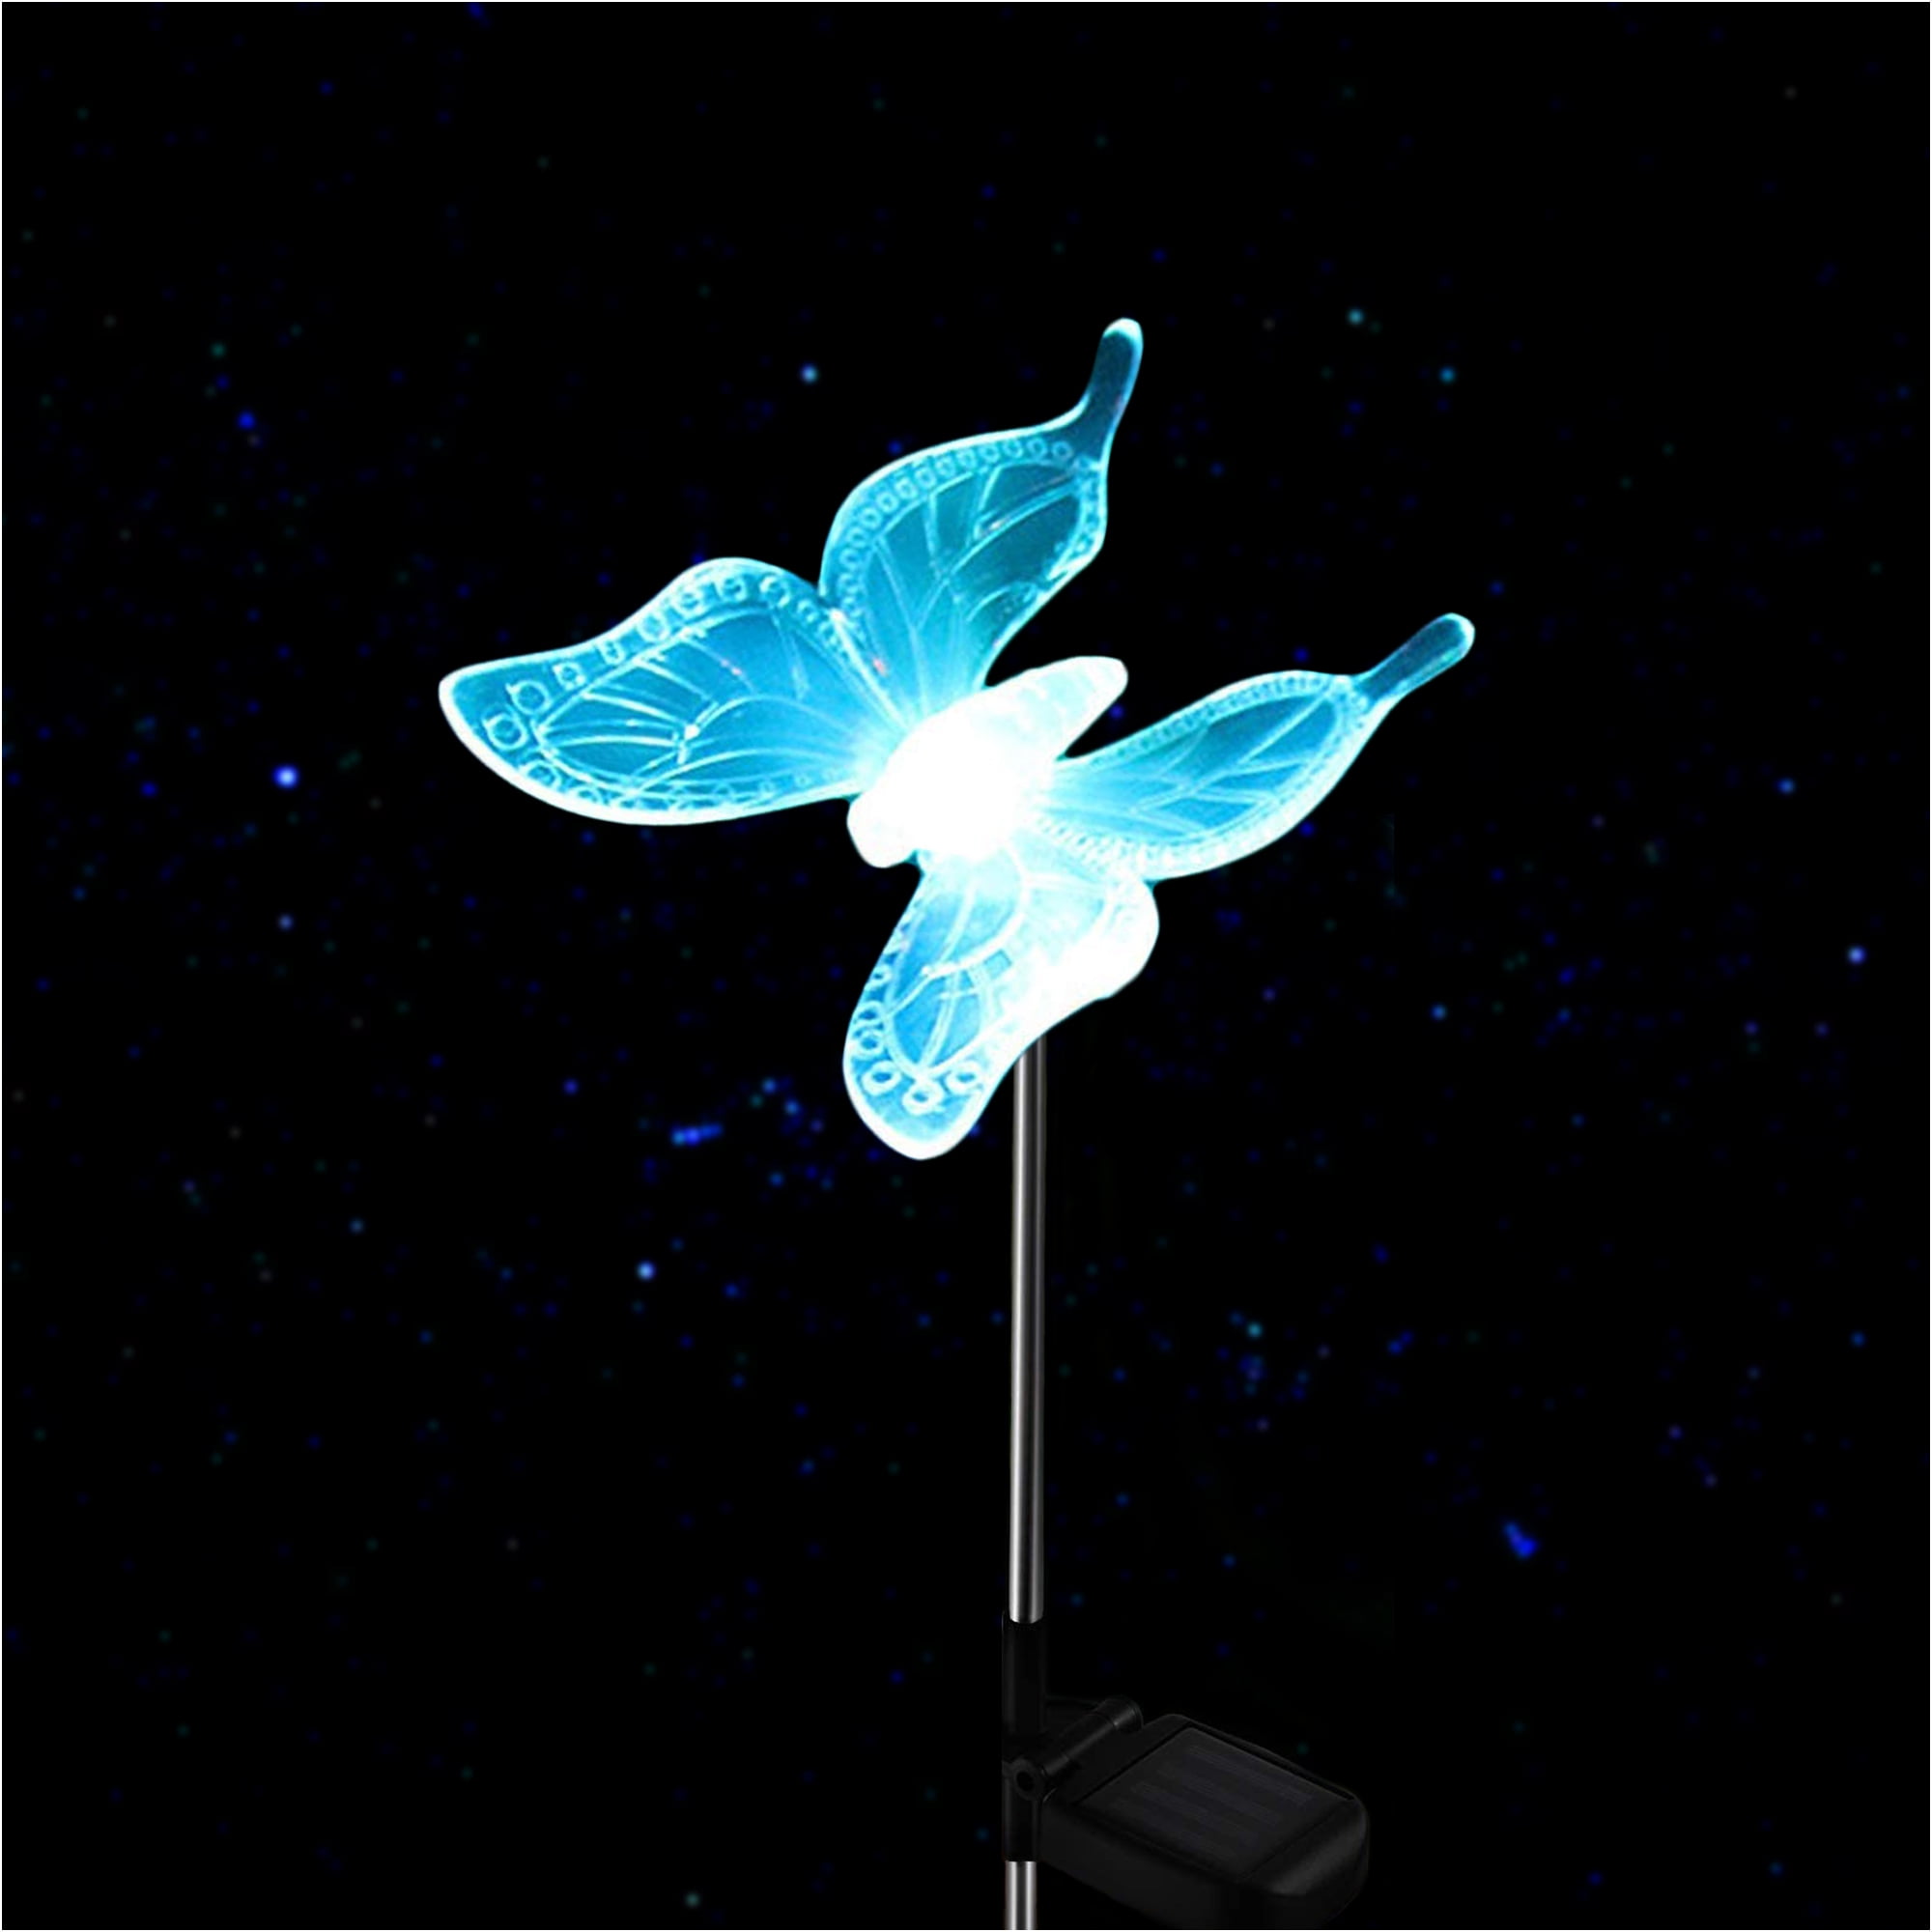 Details about   Hanging Solar Garden Lights Butterfly Lantern Outdoor Stake Landscape Decor US 